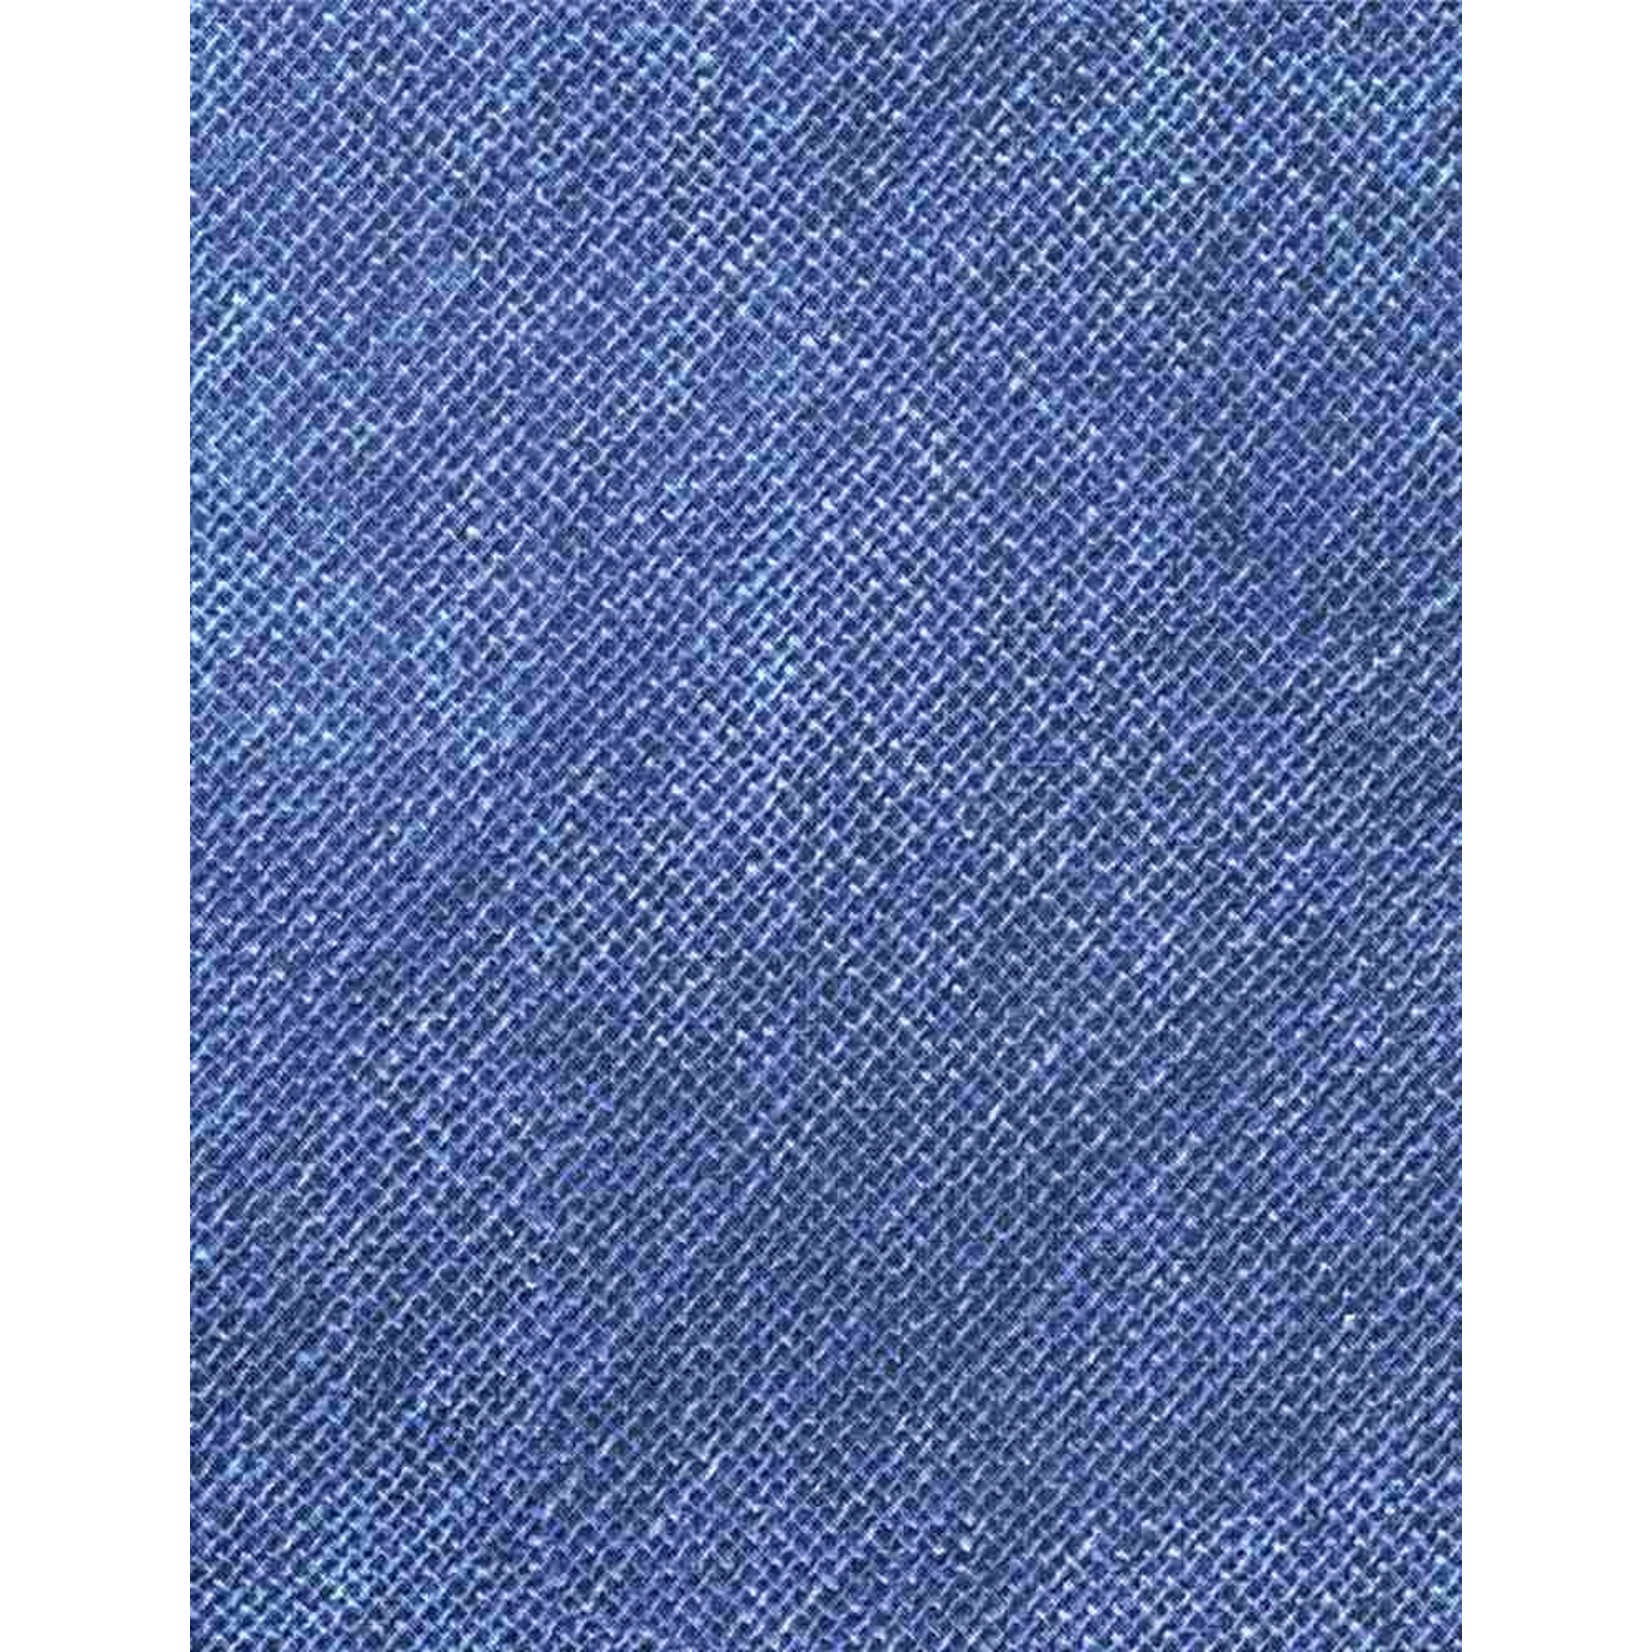 Timeless Treasures Gilded City, Burlap Texture, Blue (C8134-BLU) $0.20 per cm or $20/m